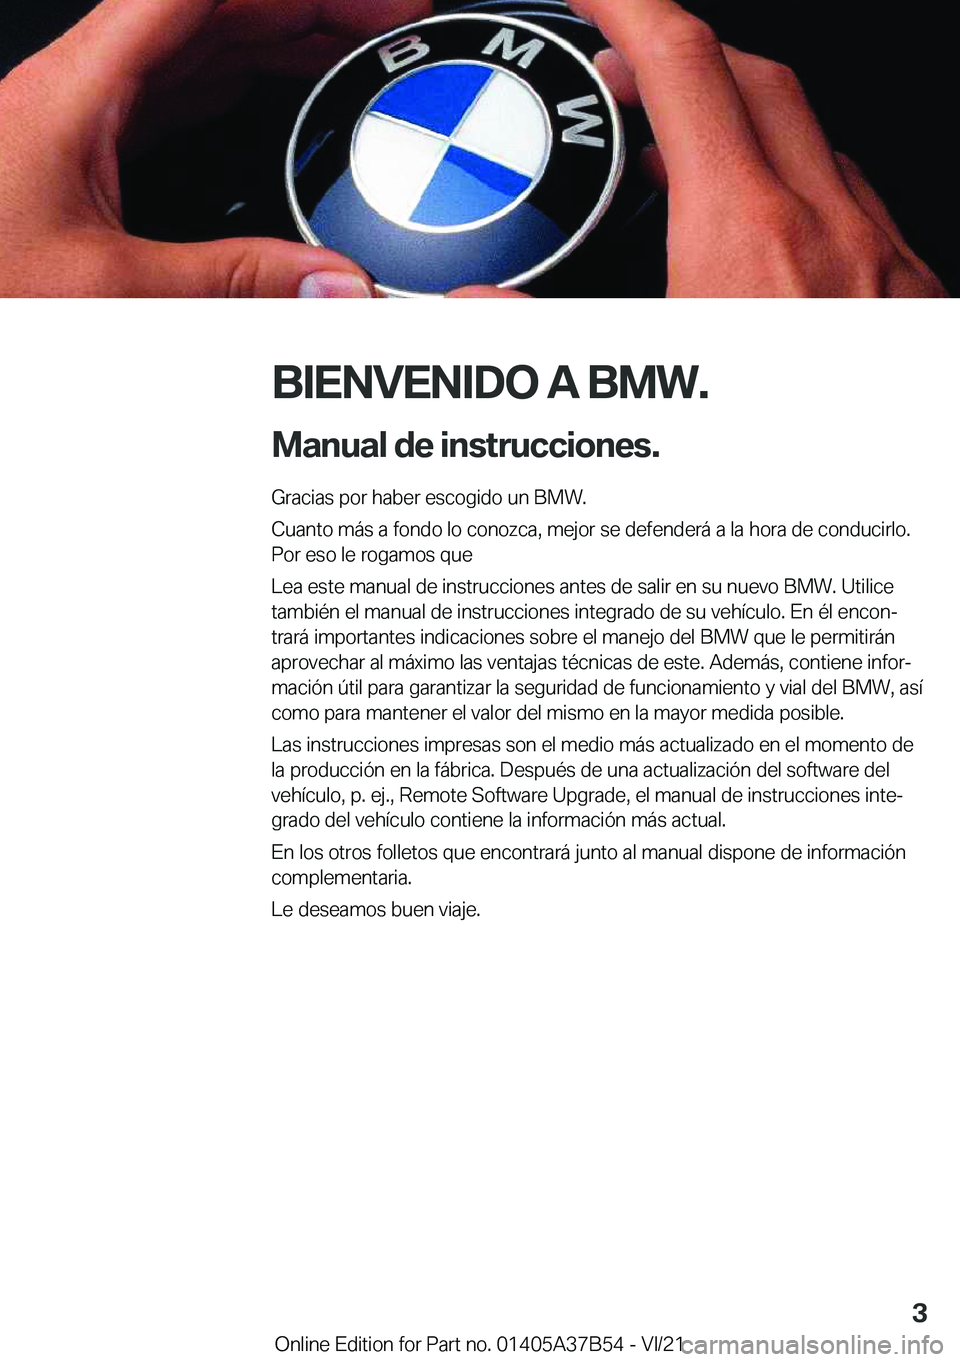 BMW M8 2022  Manuales de Empleo (in Spanish) �B�I�E�N�V�E�N�I�D�O��A��B�M�W�.
�M�a�n�u�a�l��d�e��i�n�s�t�r�u�c�c�i�o�n�e�s�. �G�r�a�c�i�a�s��p�o�r��h�a�b�e�r��e�s�c�o�g�i�d�o��u�n��B�M�W�.
�C�u�a�n�t�o��m�